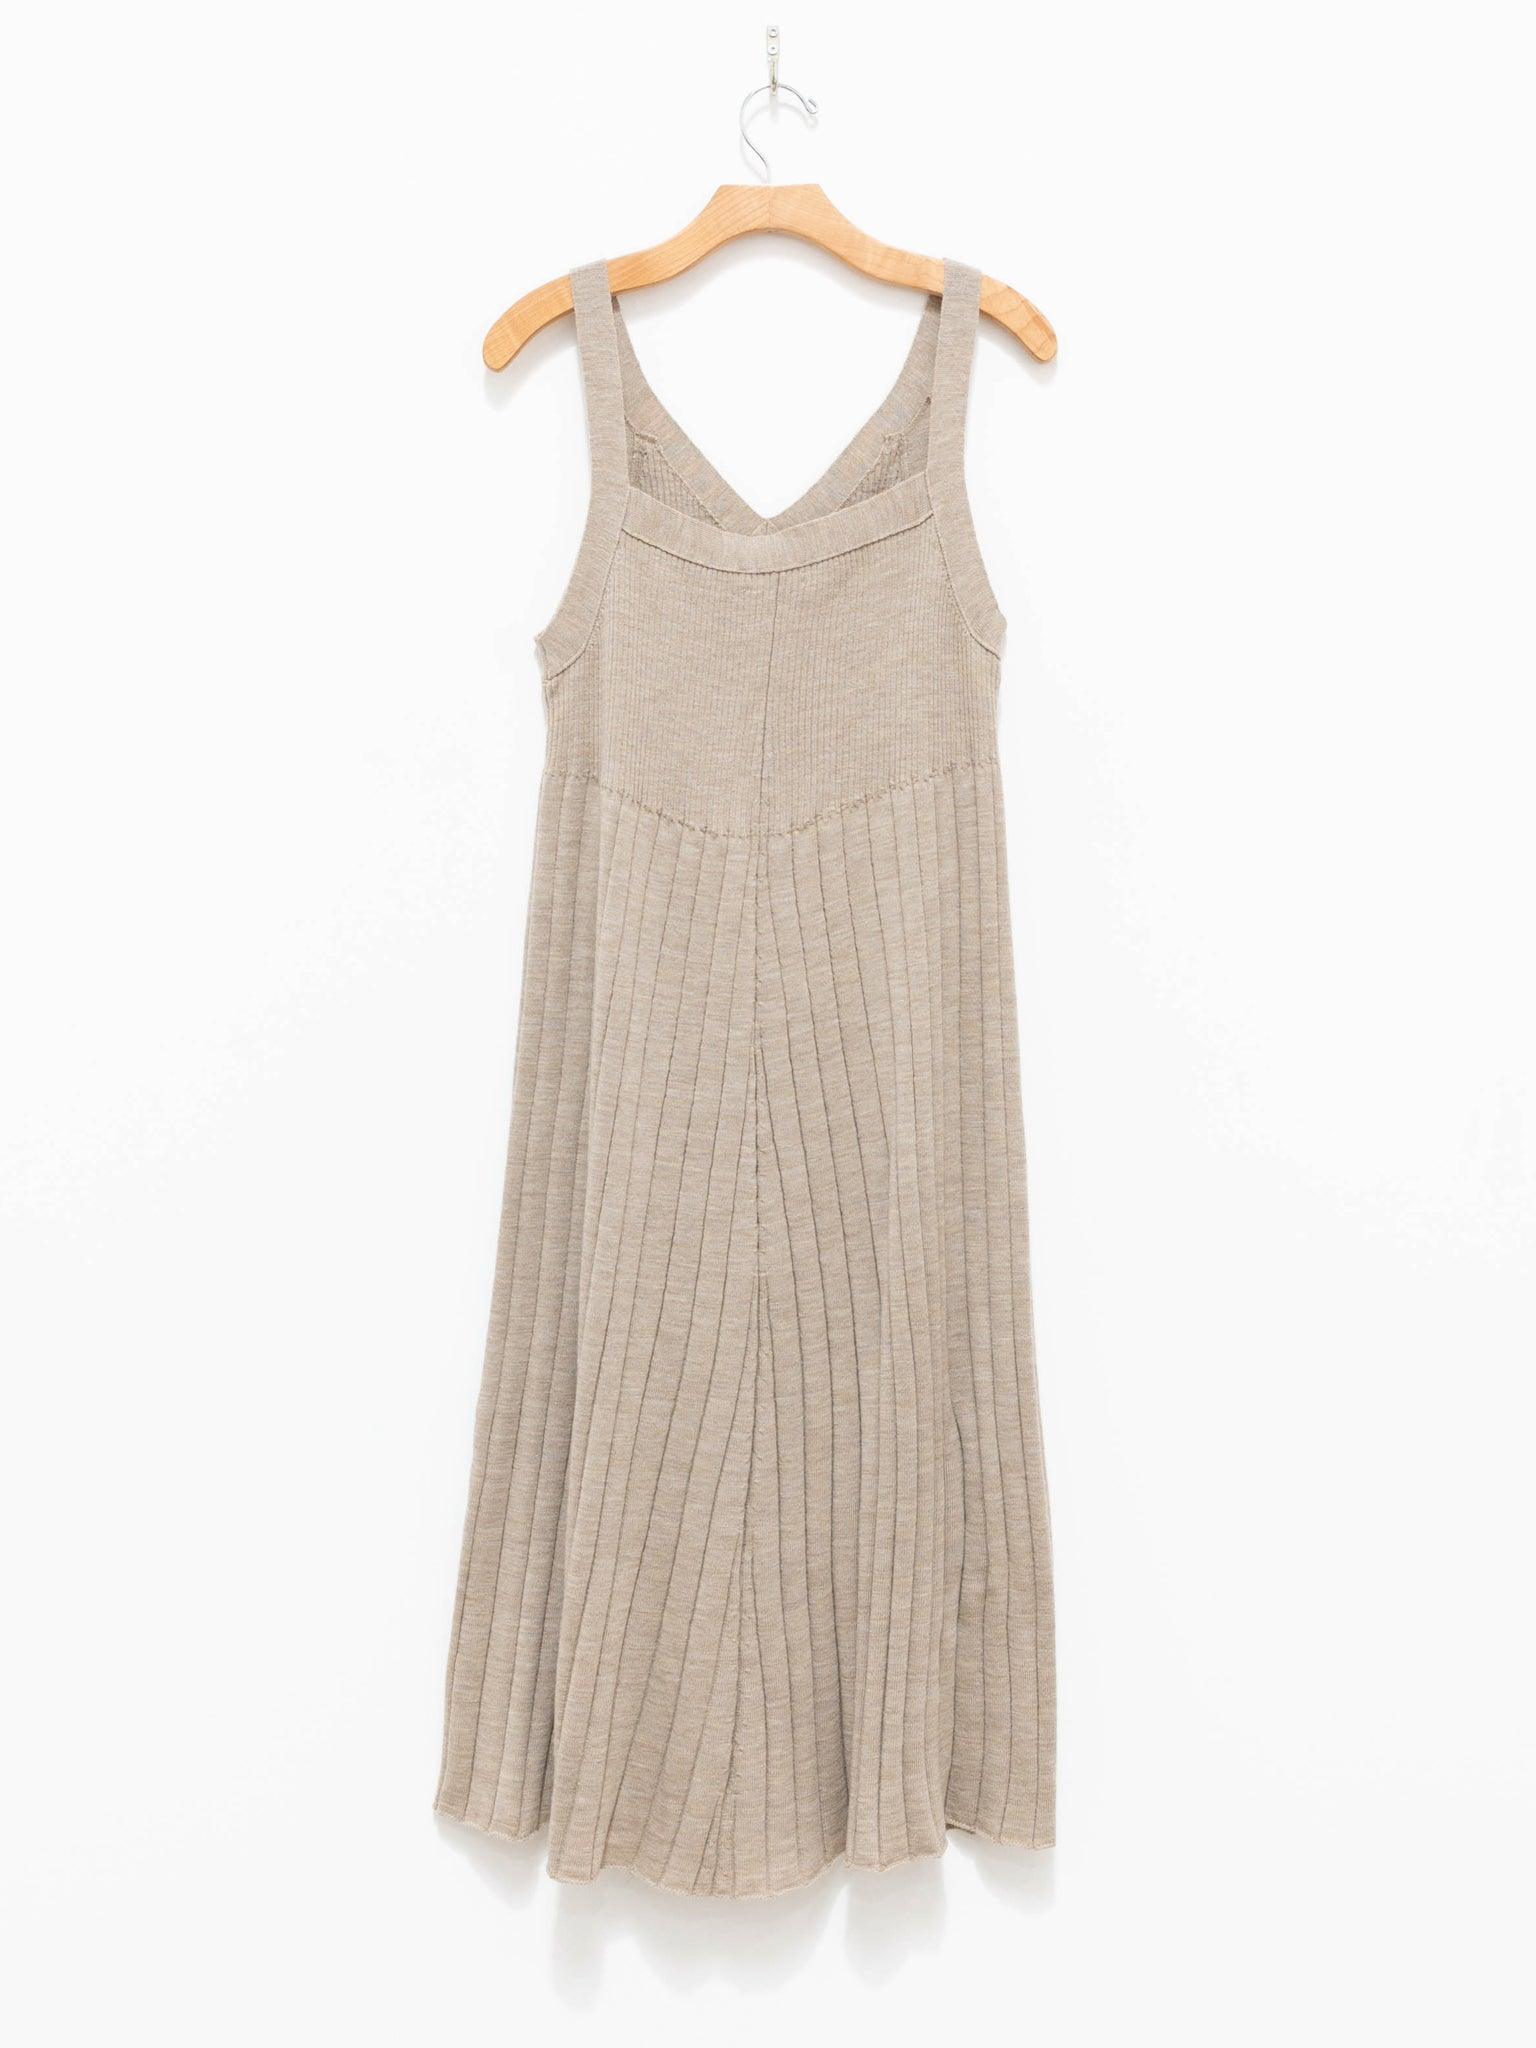 Namu Shop - Phlannel Worsted Wool Knit Camisole Dress - Beige